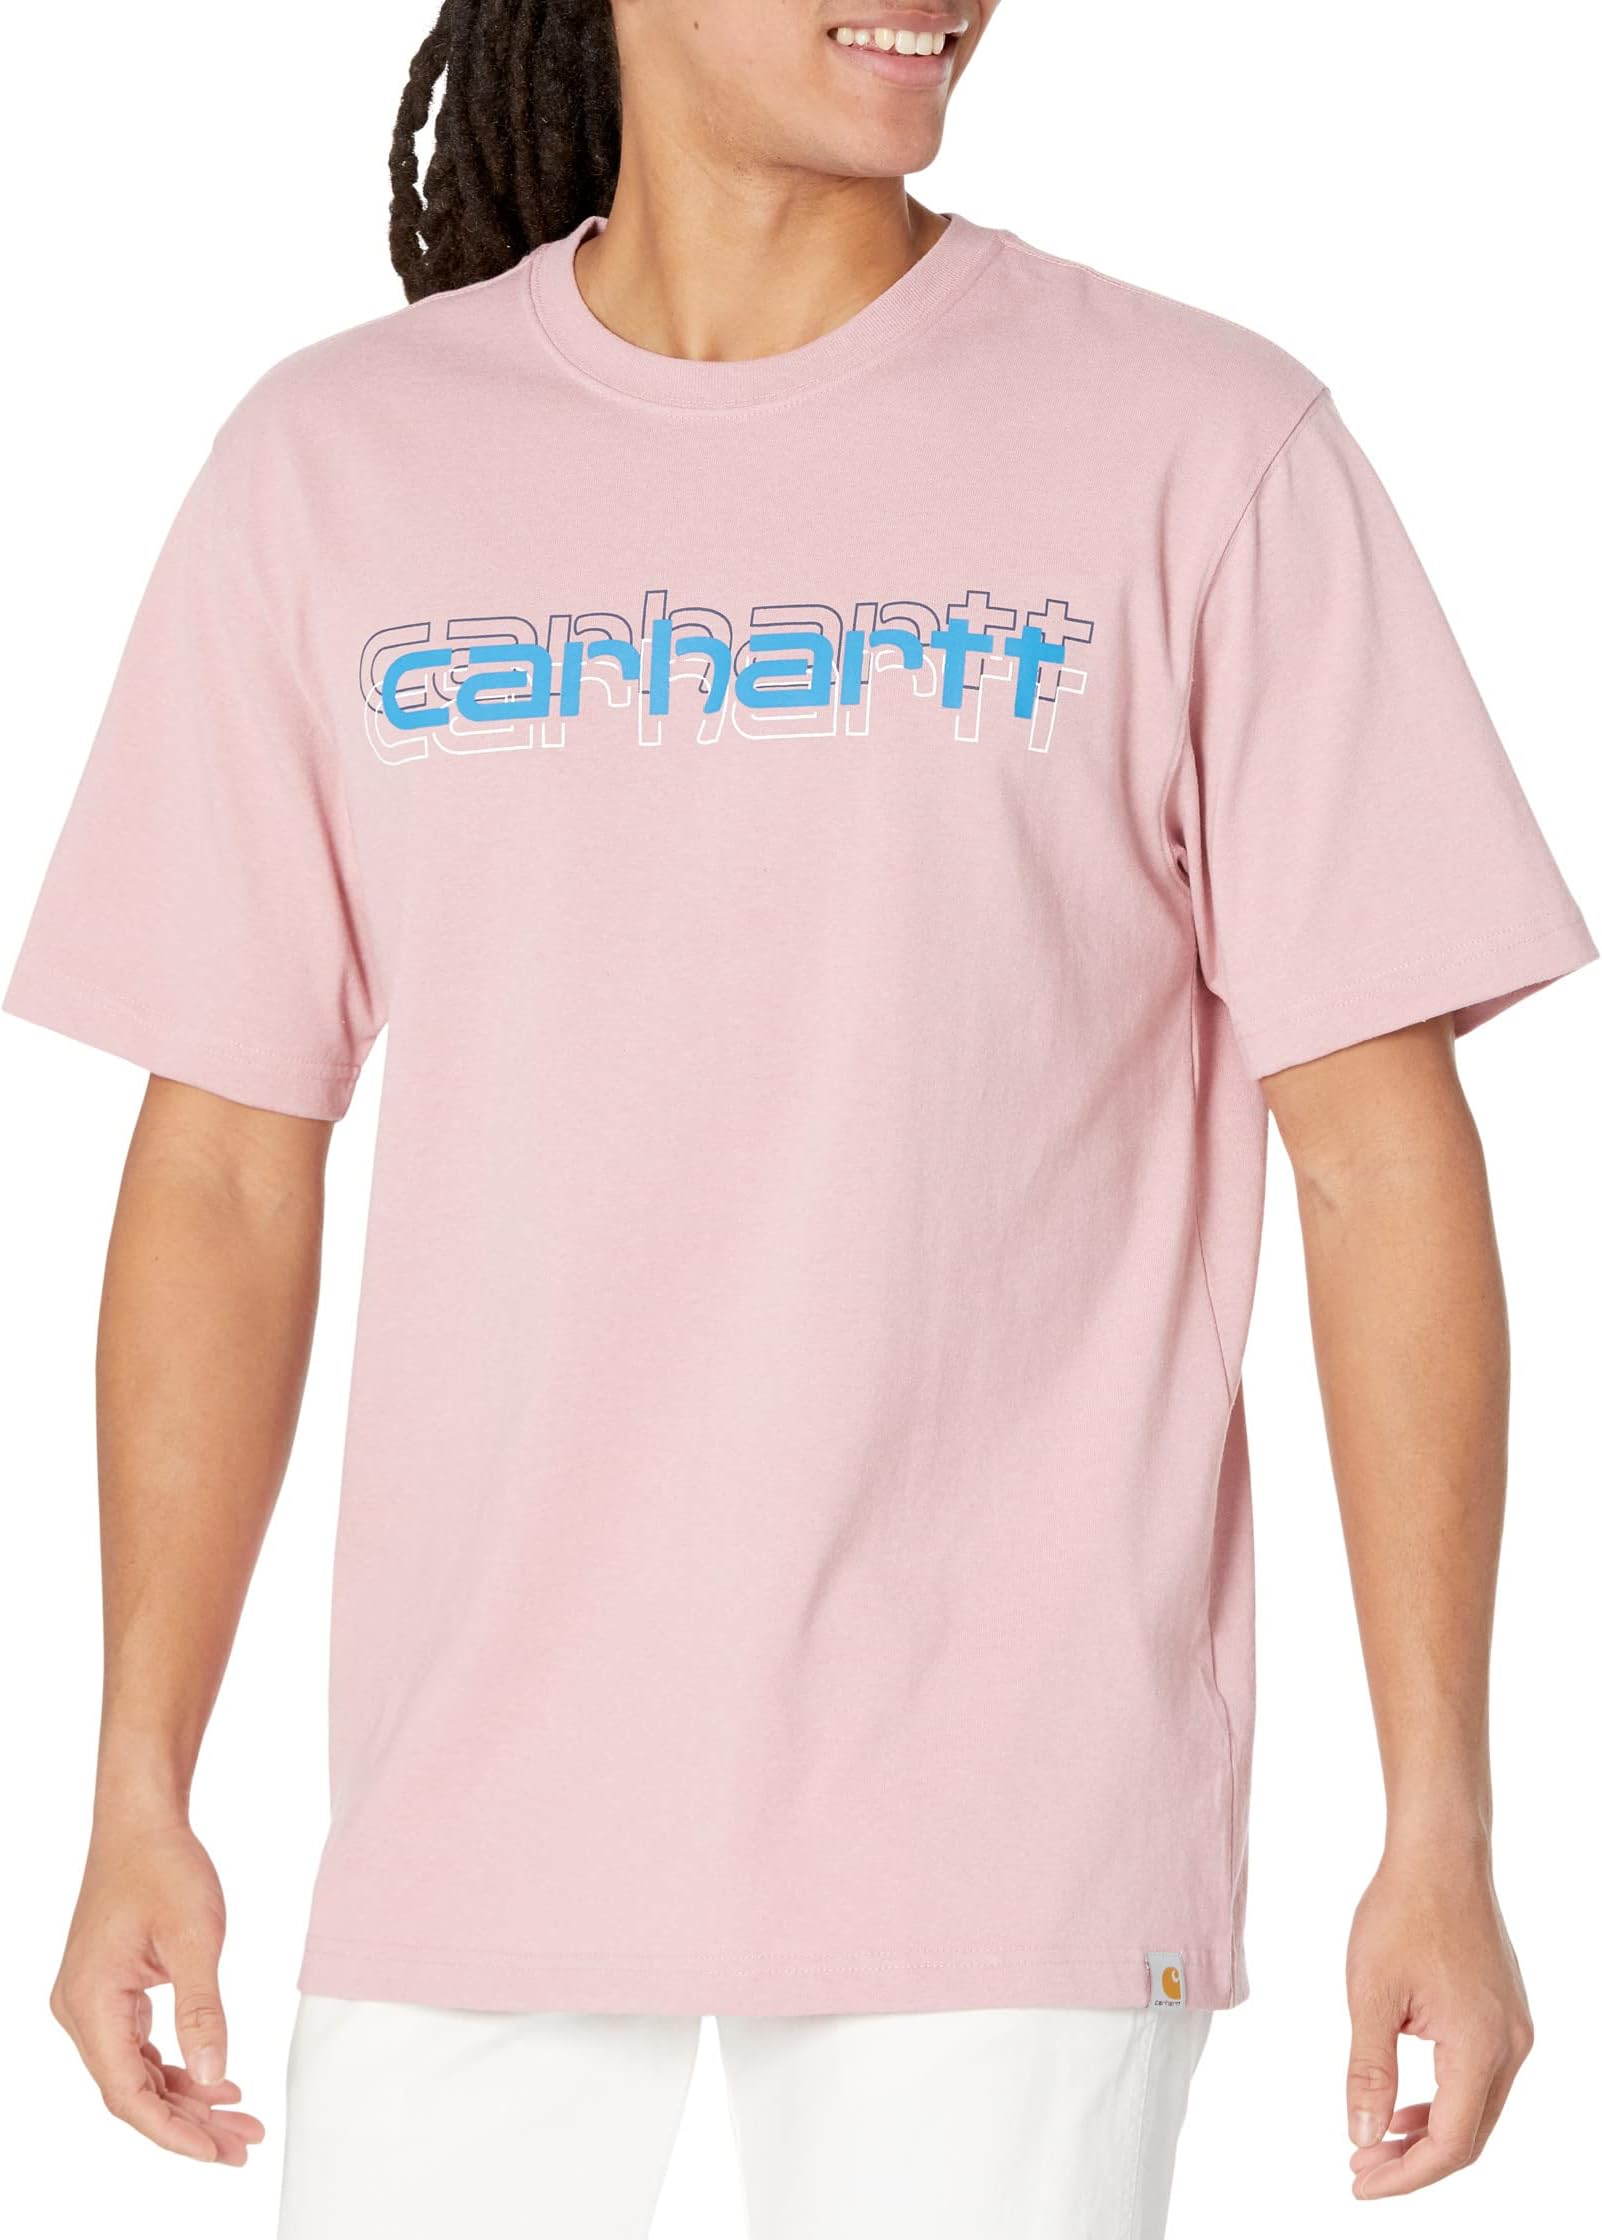 barlow christie foxglove farm Свободная футболка тяжелого кроя с короткими рукавами и графическим логотипом Carhartt, цвет Foxglove Heather